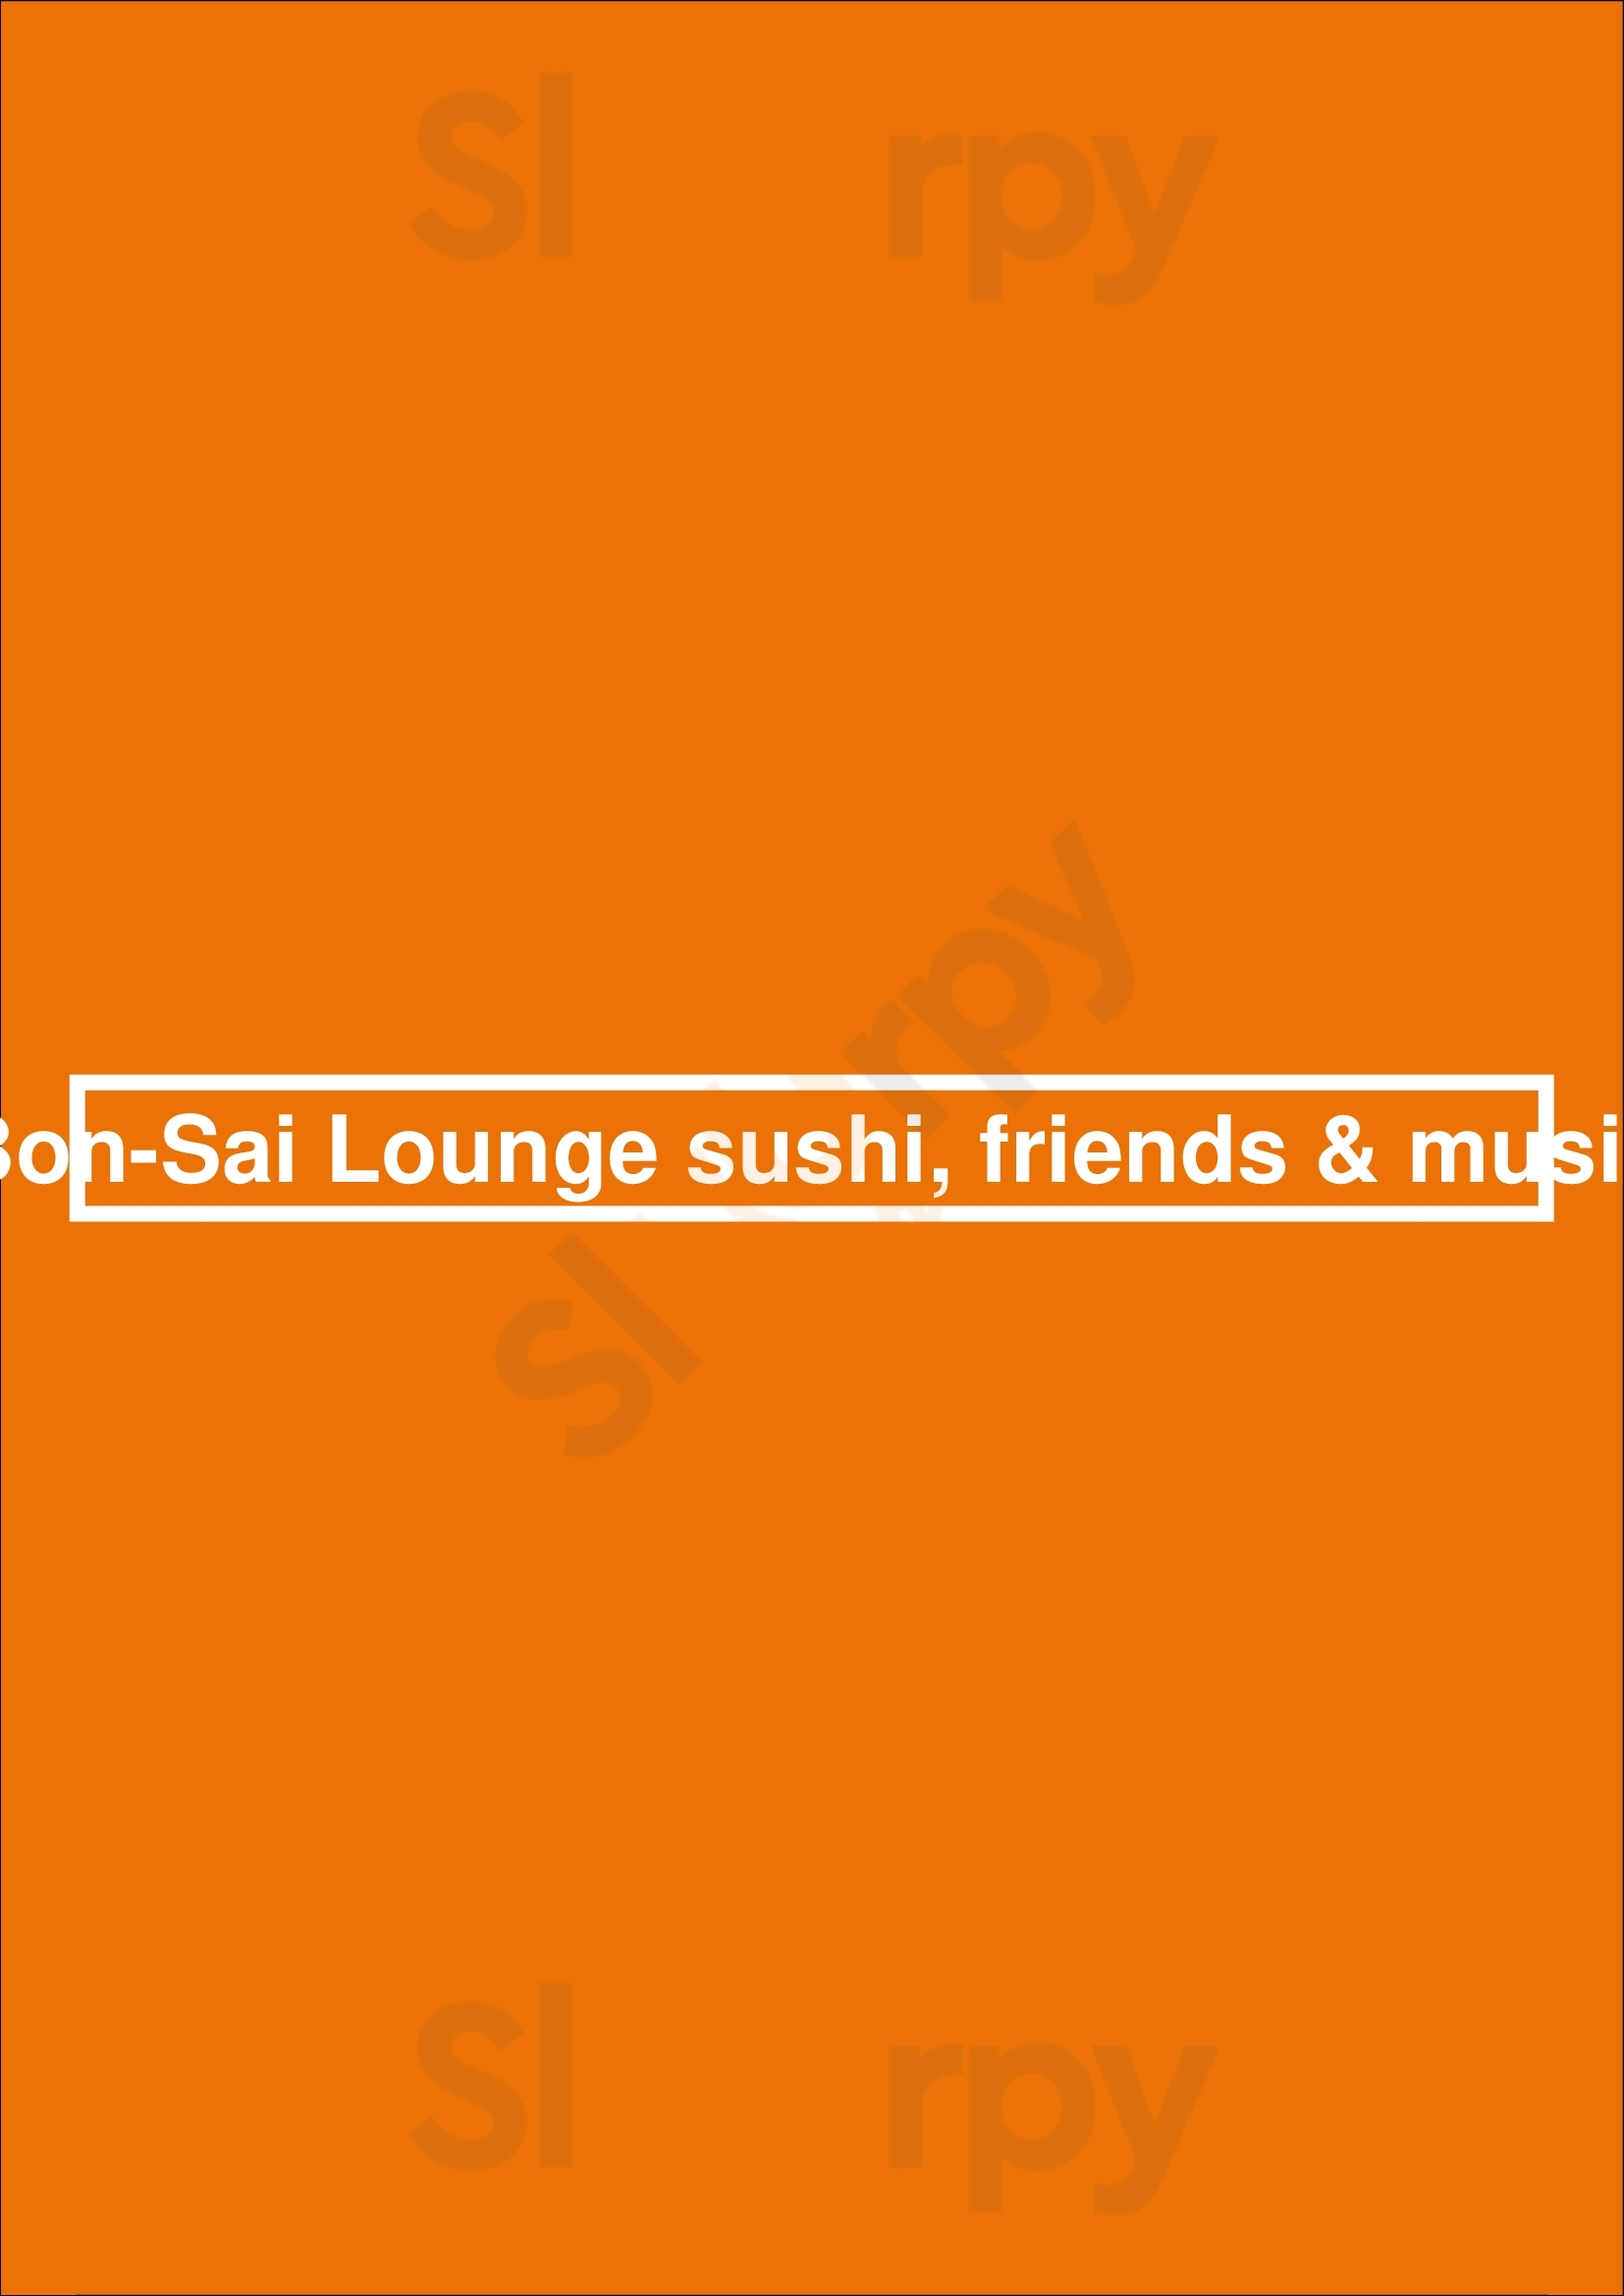 Bon-sai Lounge Sushi, Friends & Music Alcochete Menu - 1